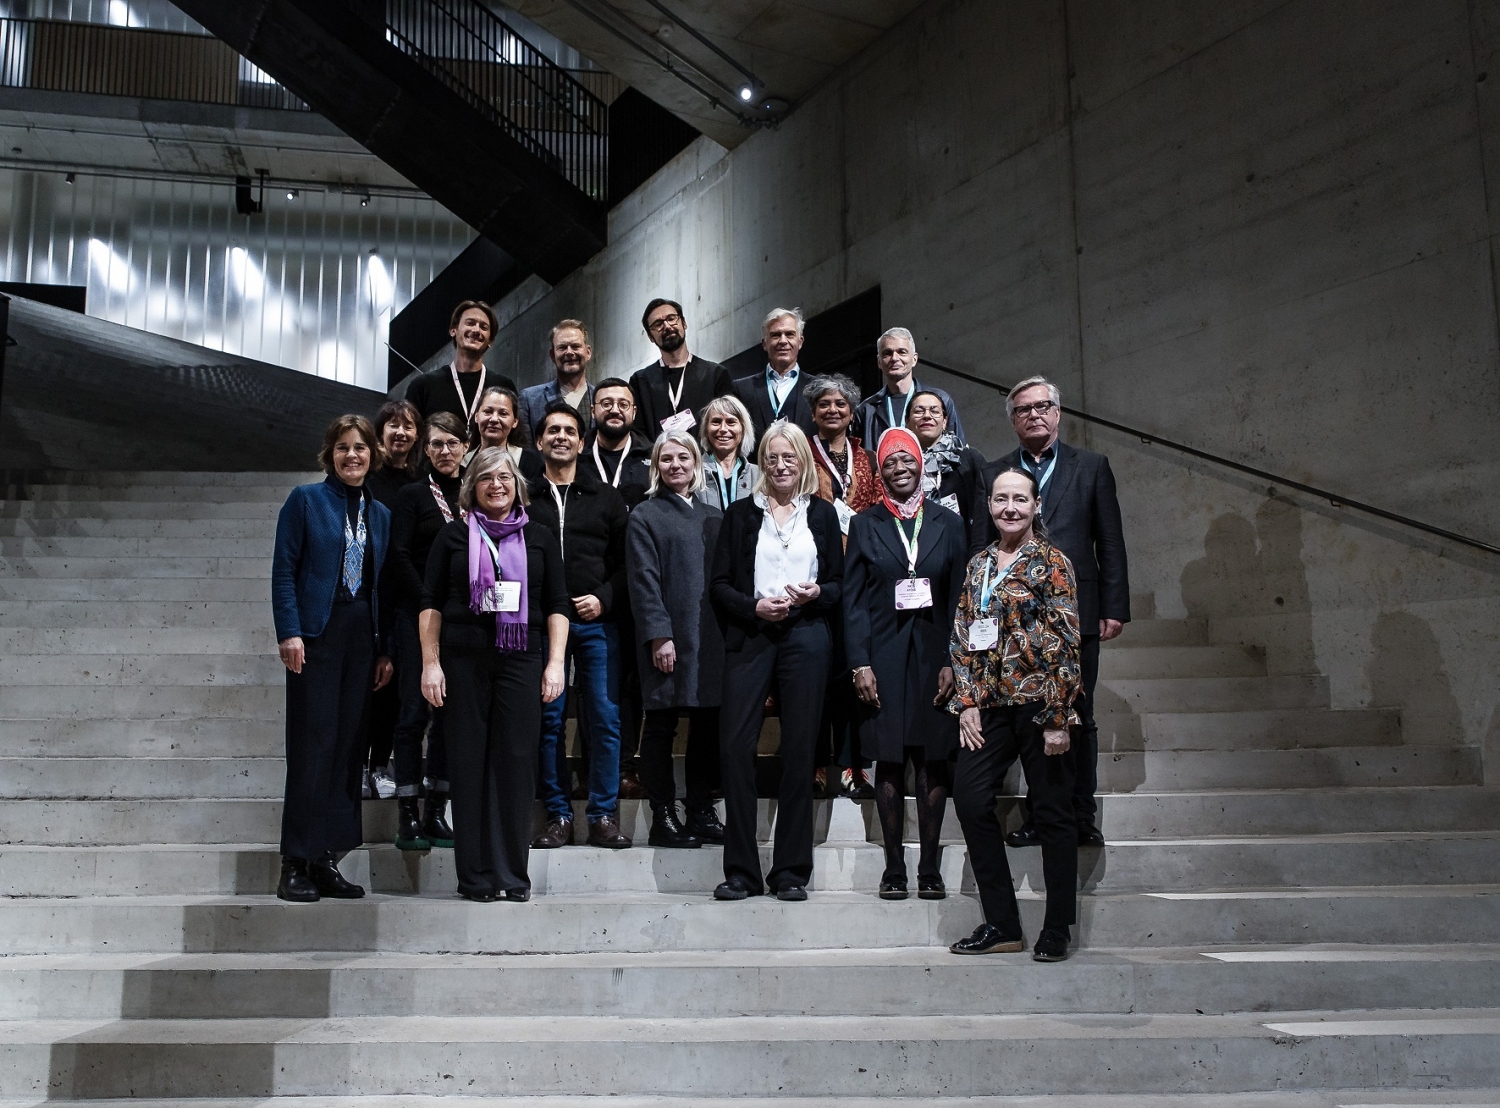 Abb.: ELIA Representative Board (Credits: Roosa Oksaharju, ELIA Biennial 2022, Helsinki)

